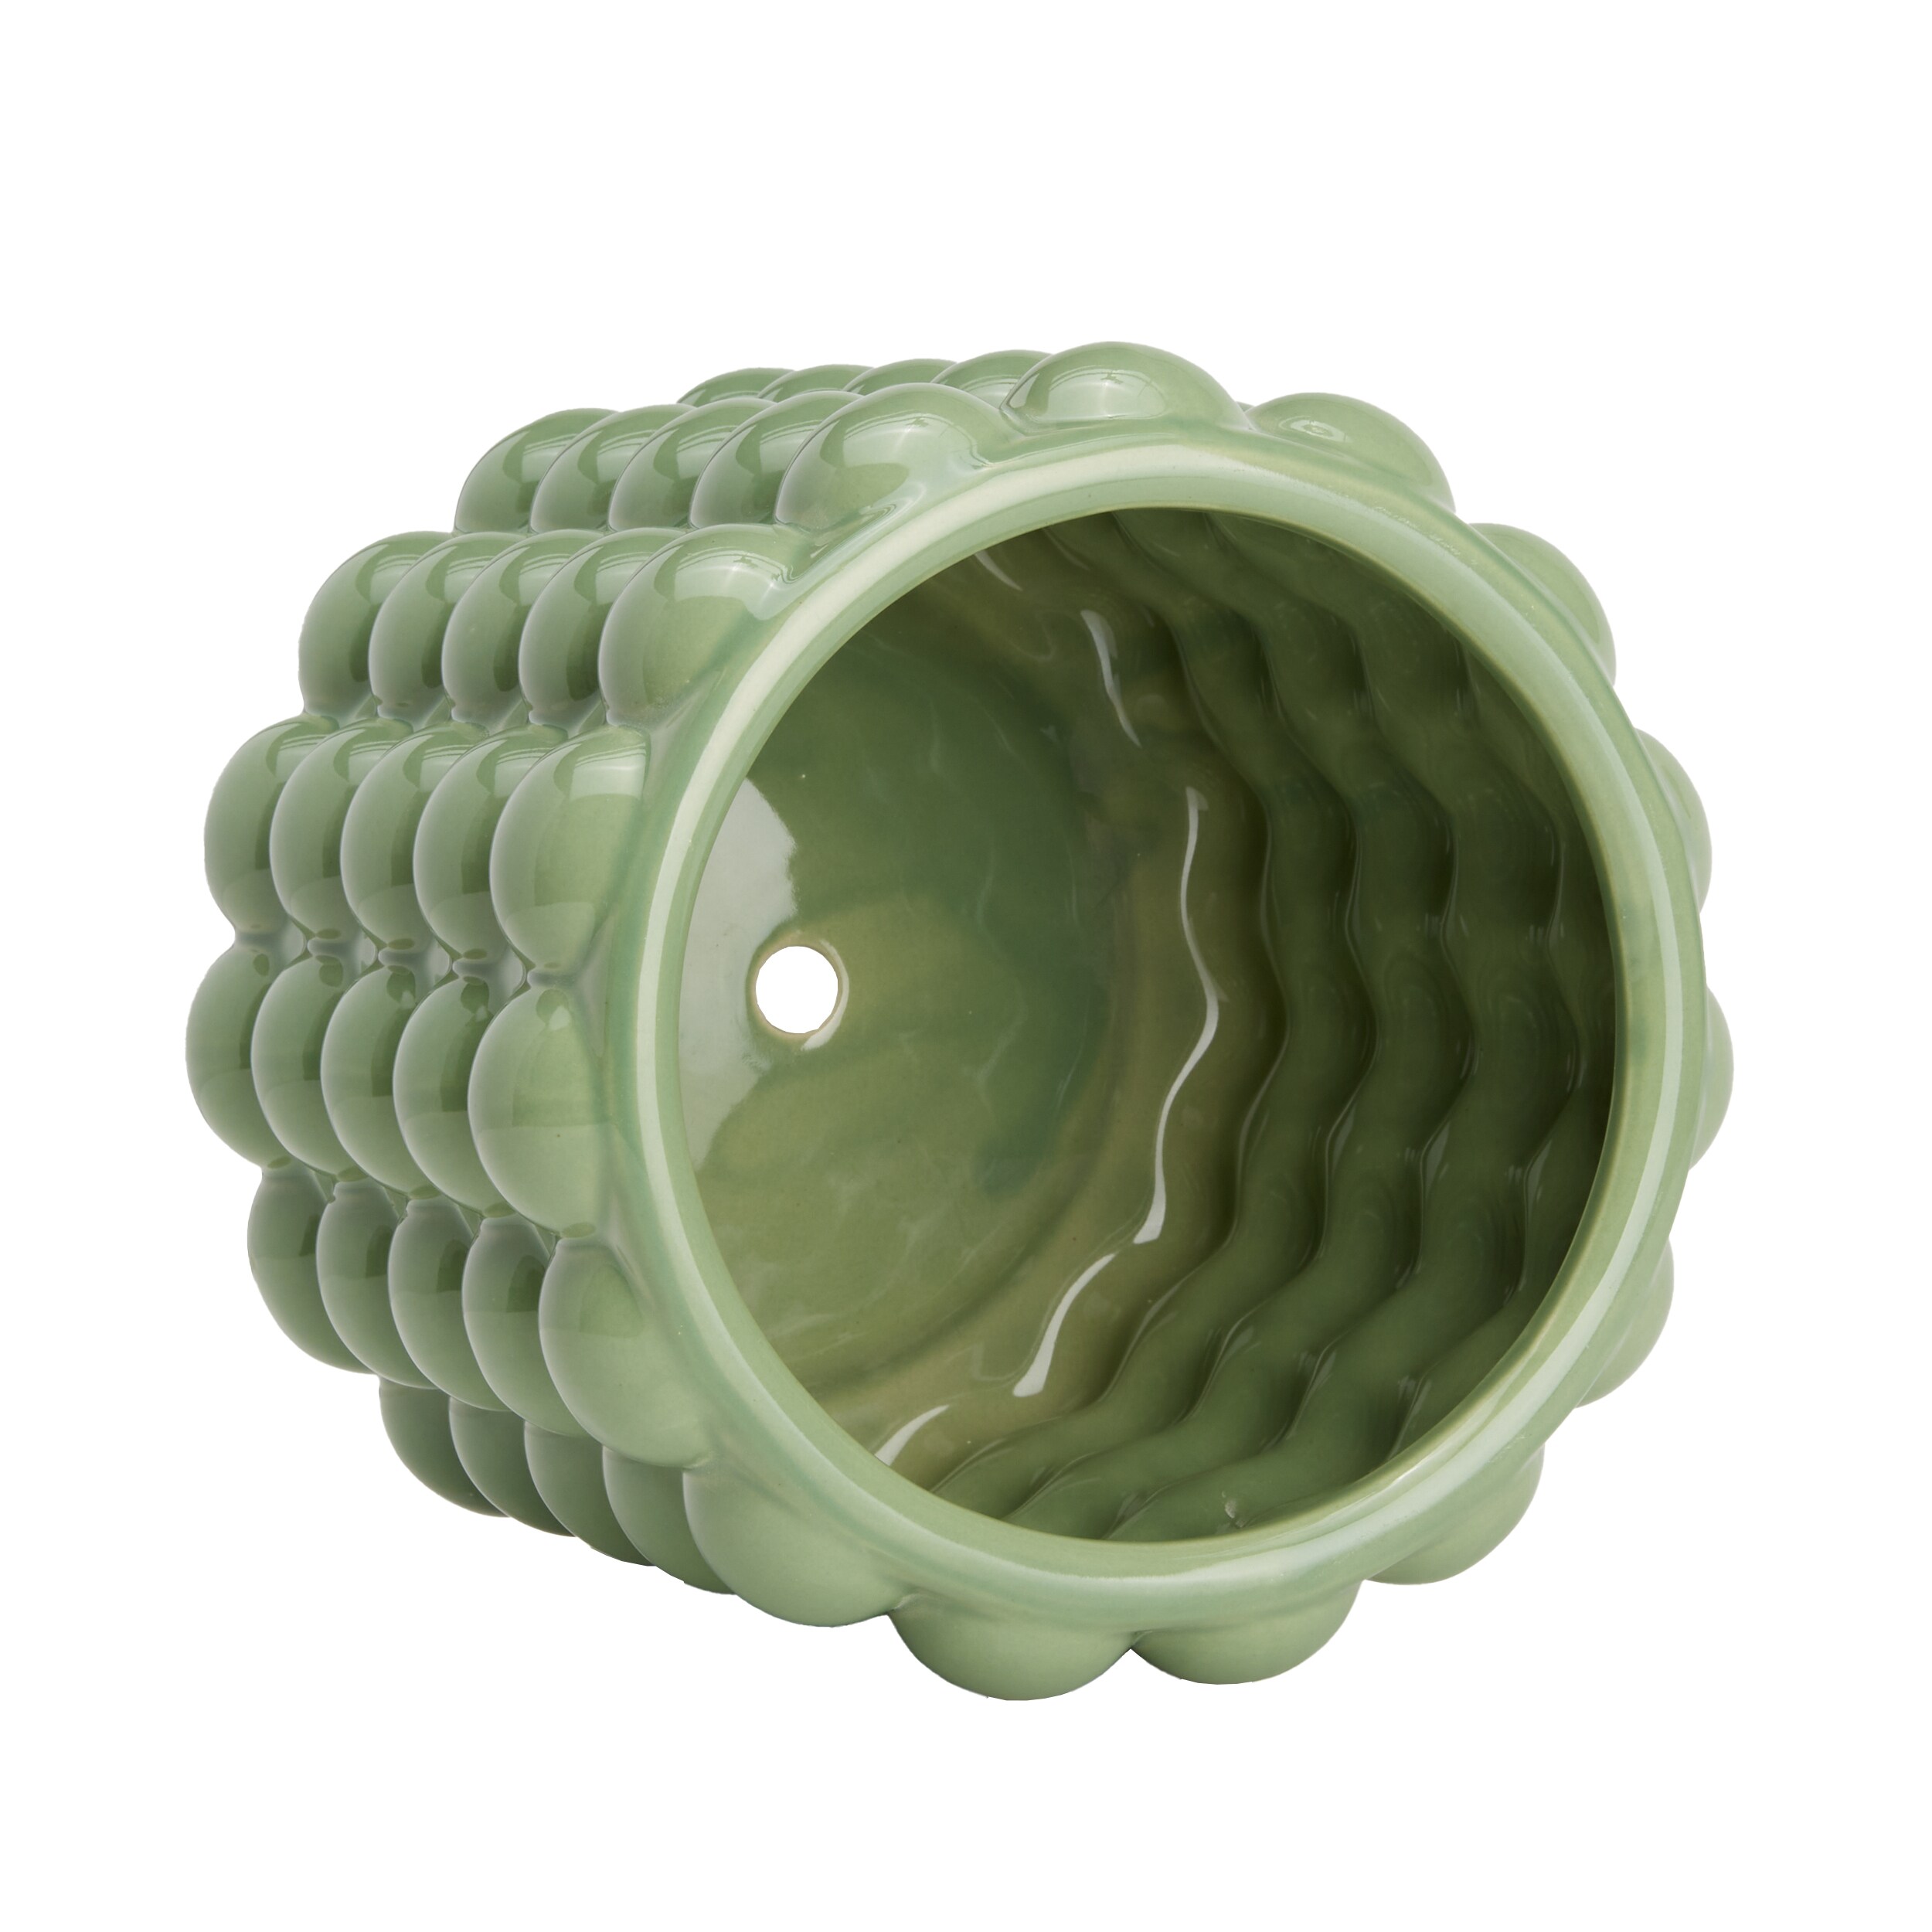 Origin 21 7.625-in W x 7-in H Green Ceramic Indoor/Outdoor Planter at